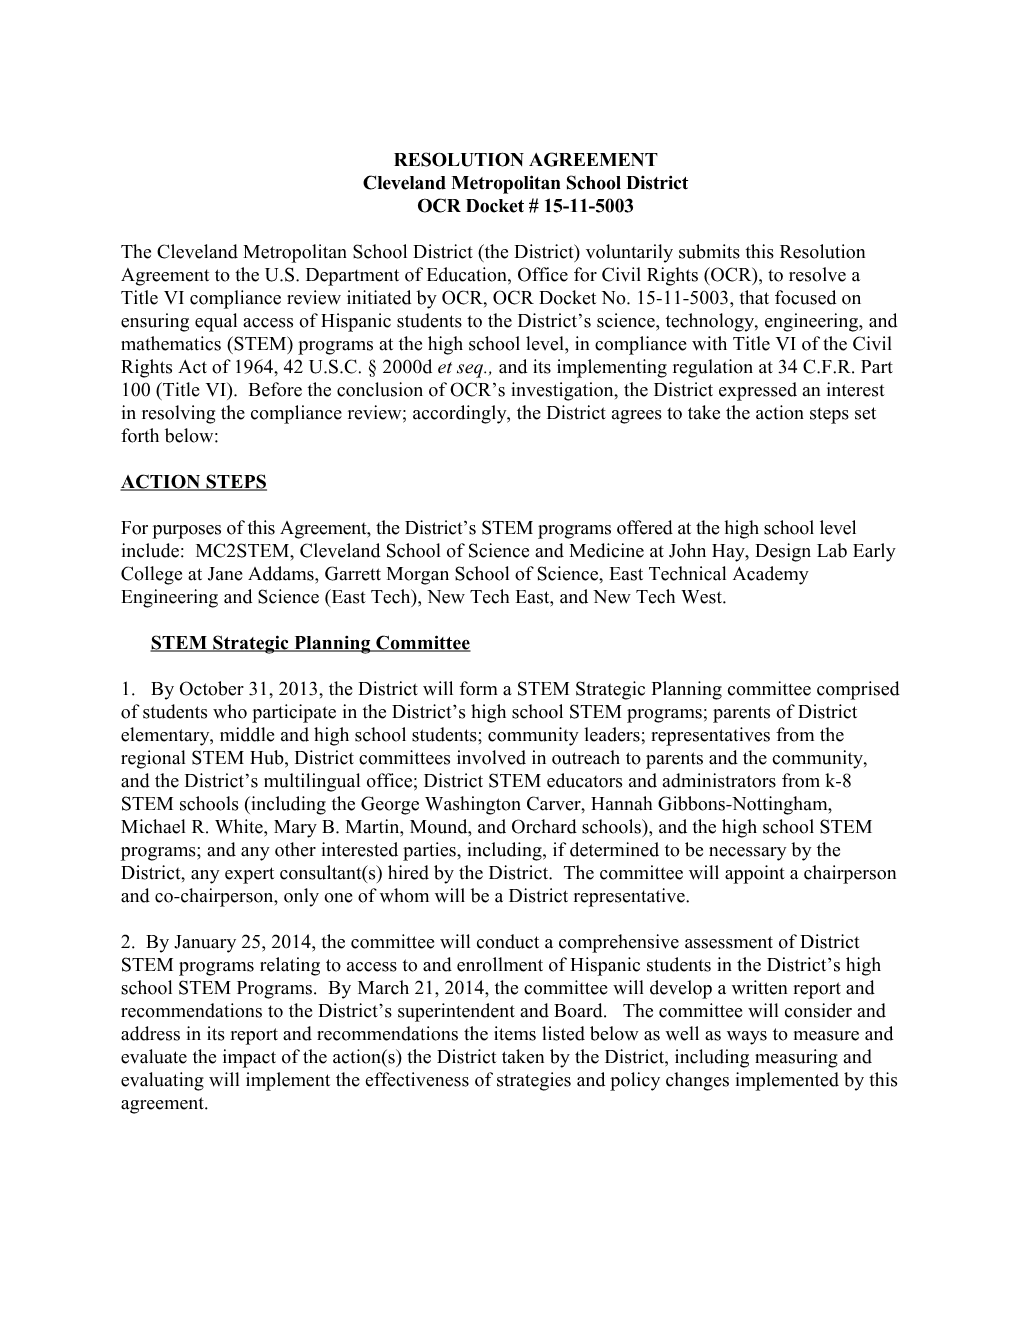 Resolution Agreement, Cleveland Metropolitan School District, Ohio: Compliance Review